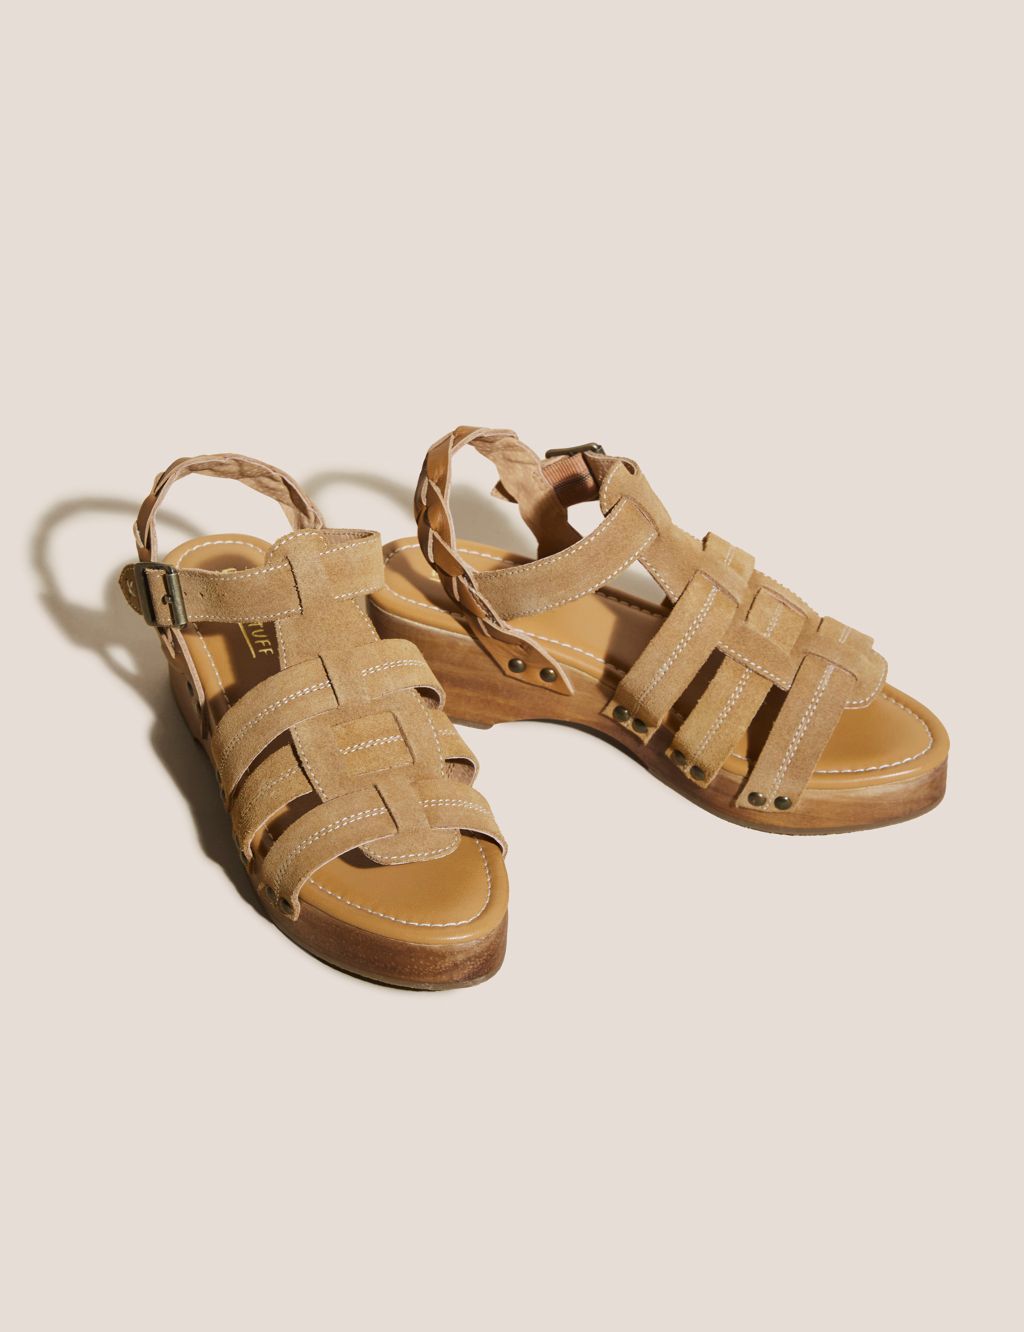 Leather Studded Gladiator Sandals image 2